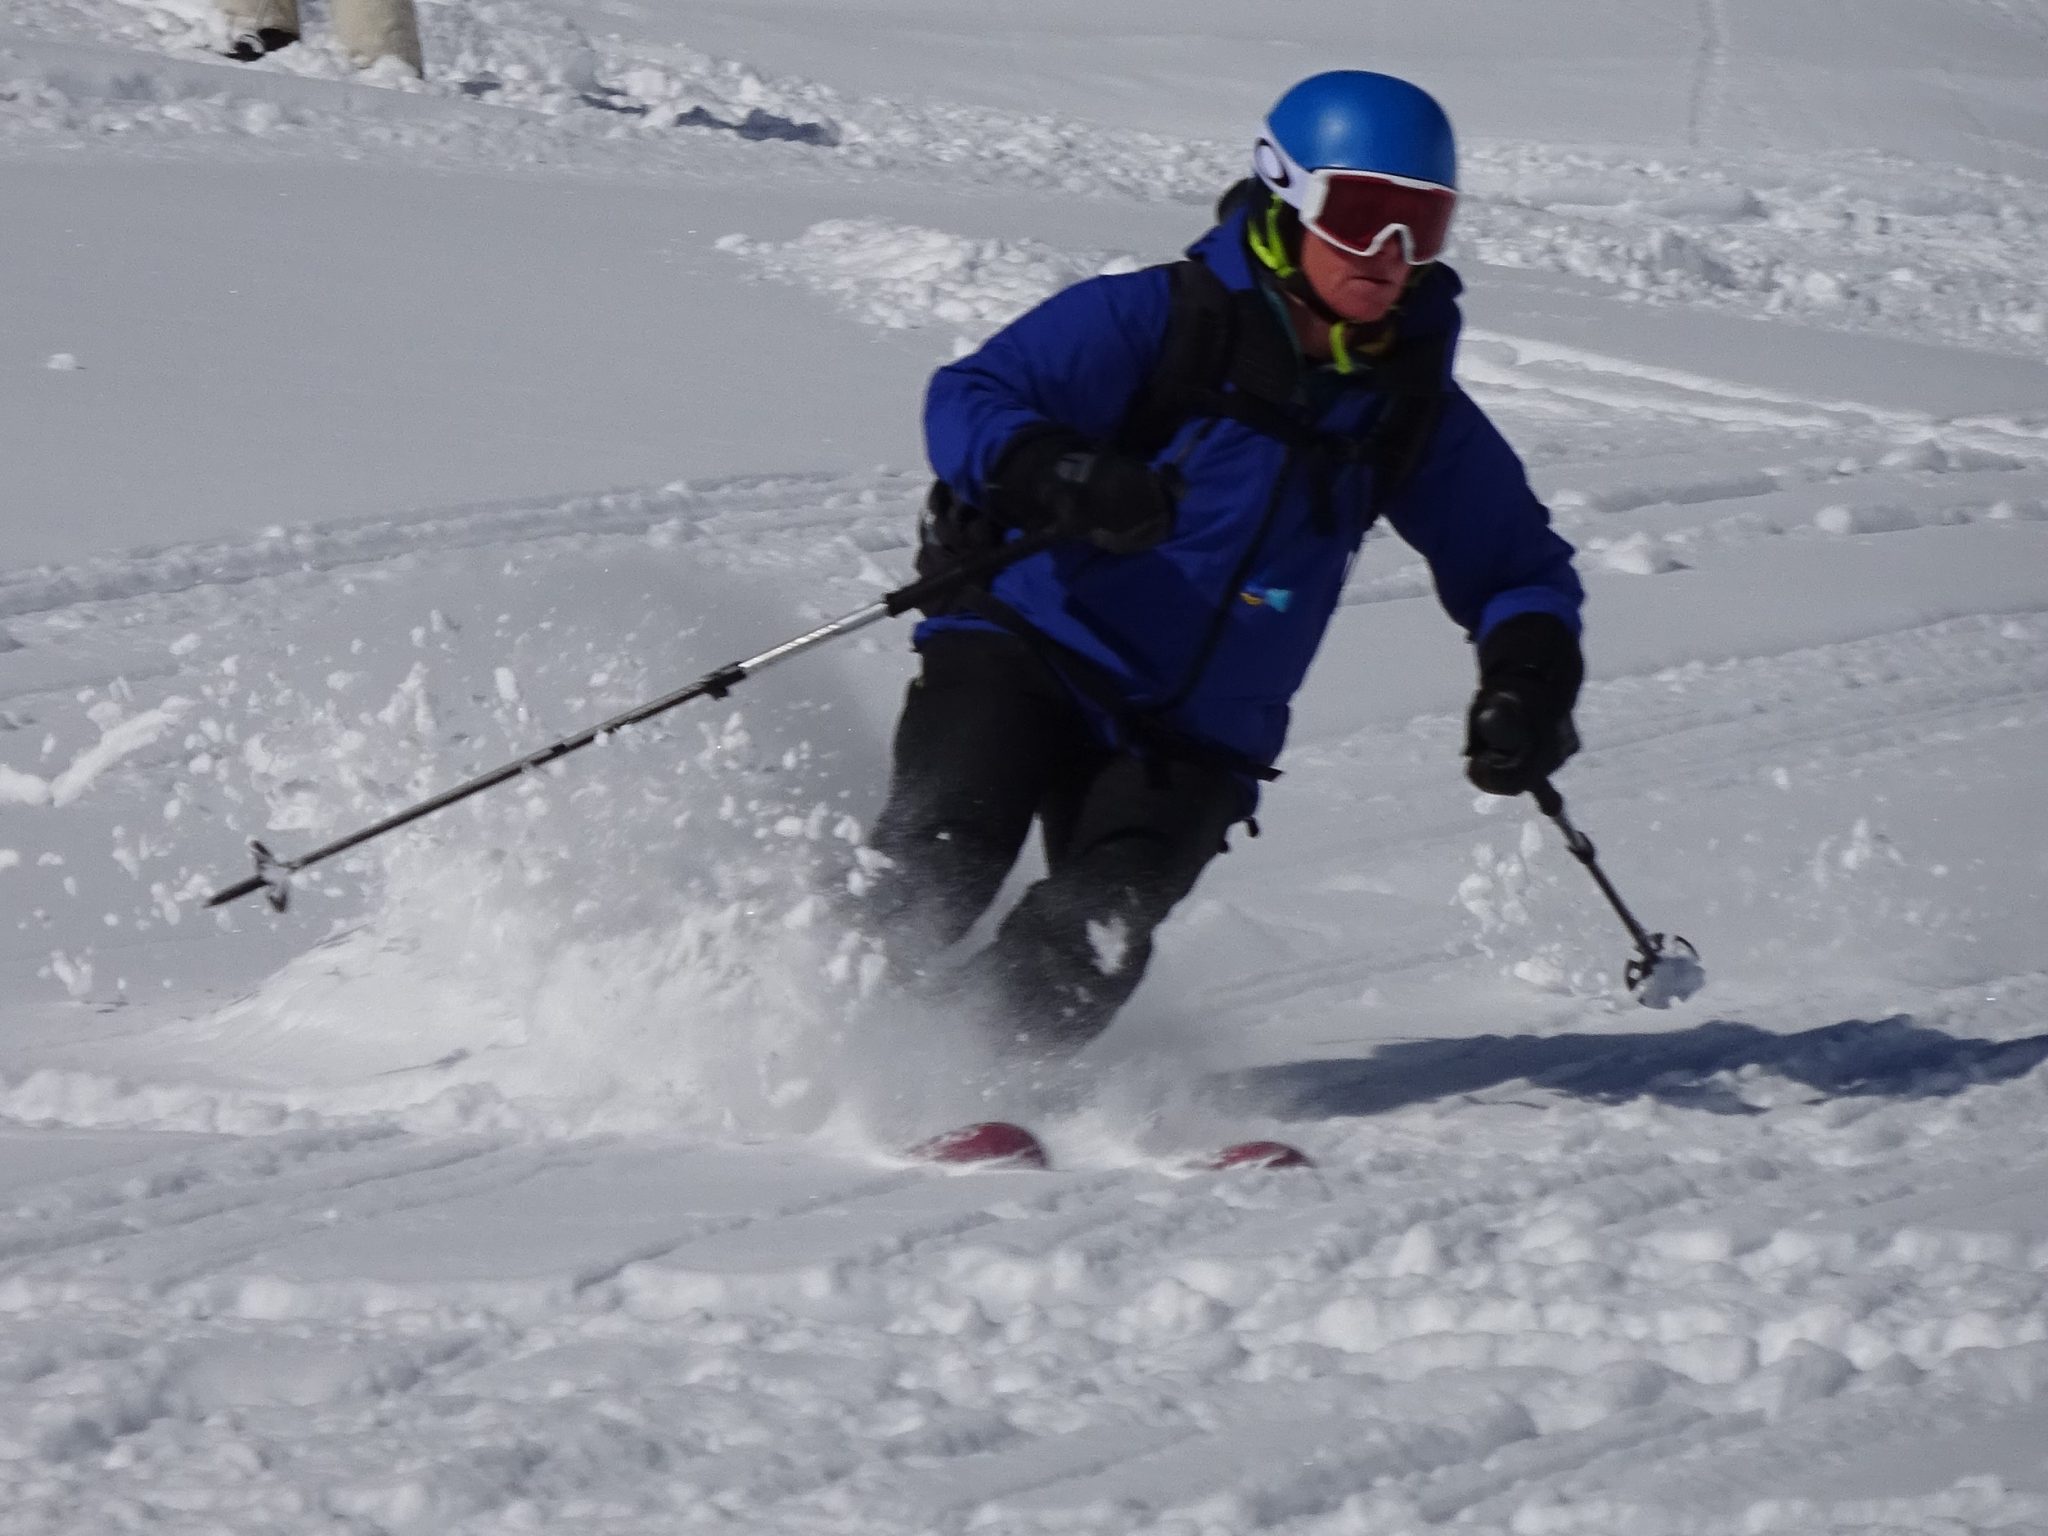 Pockets of Powder snow | Ski Breezy